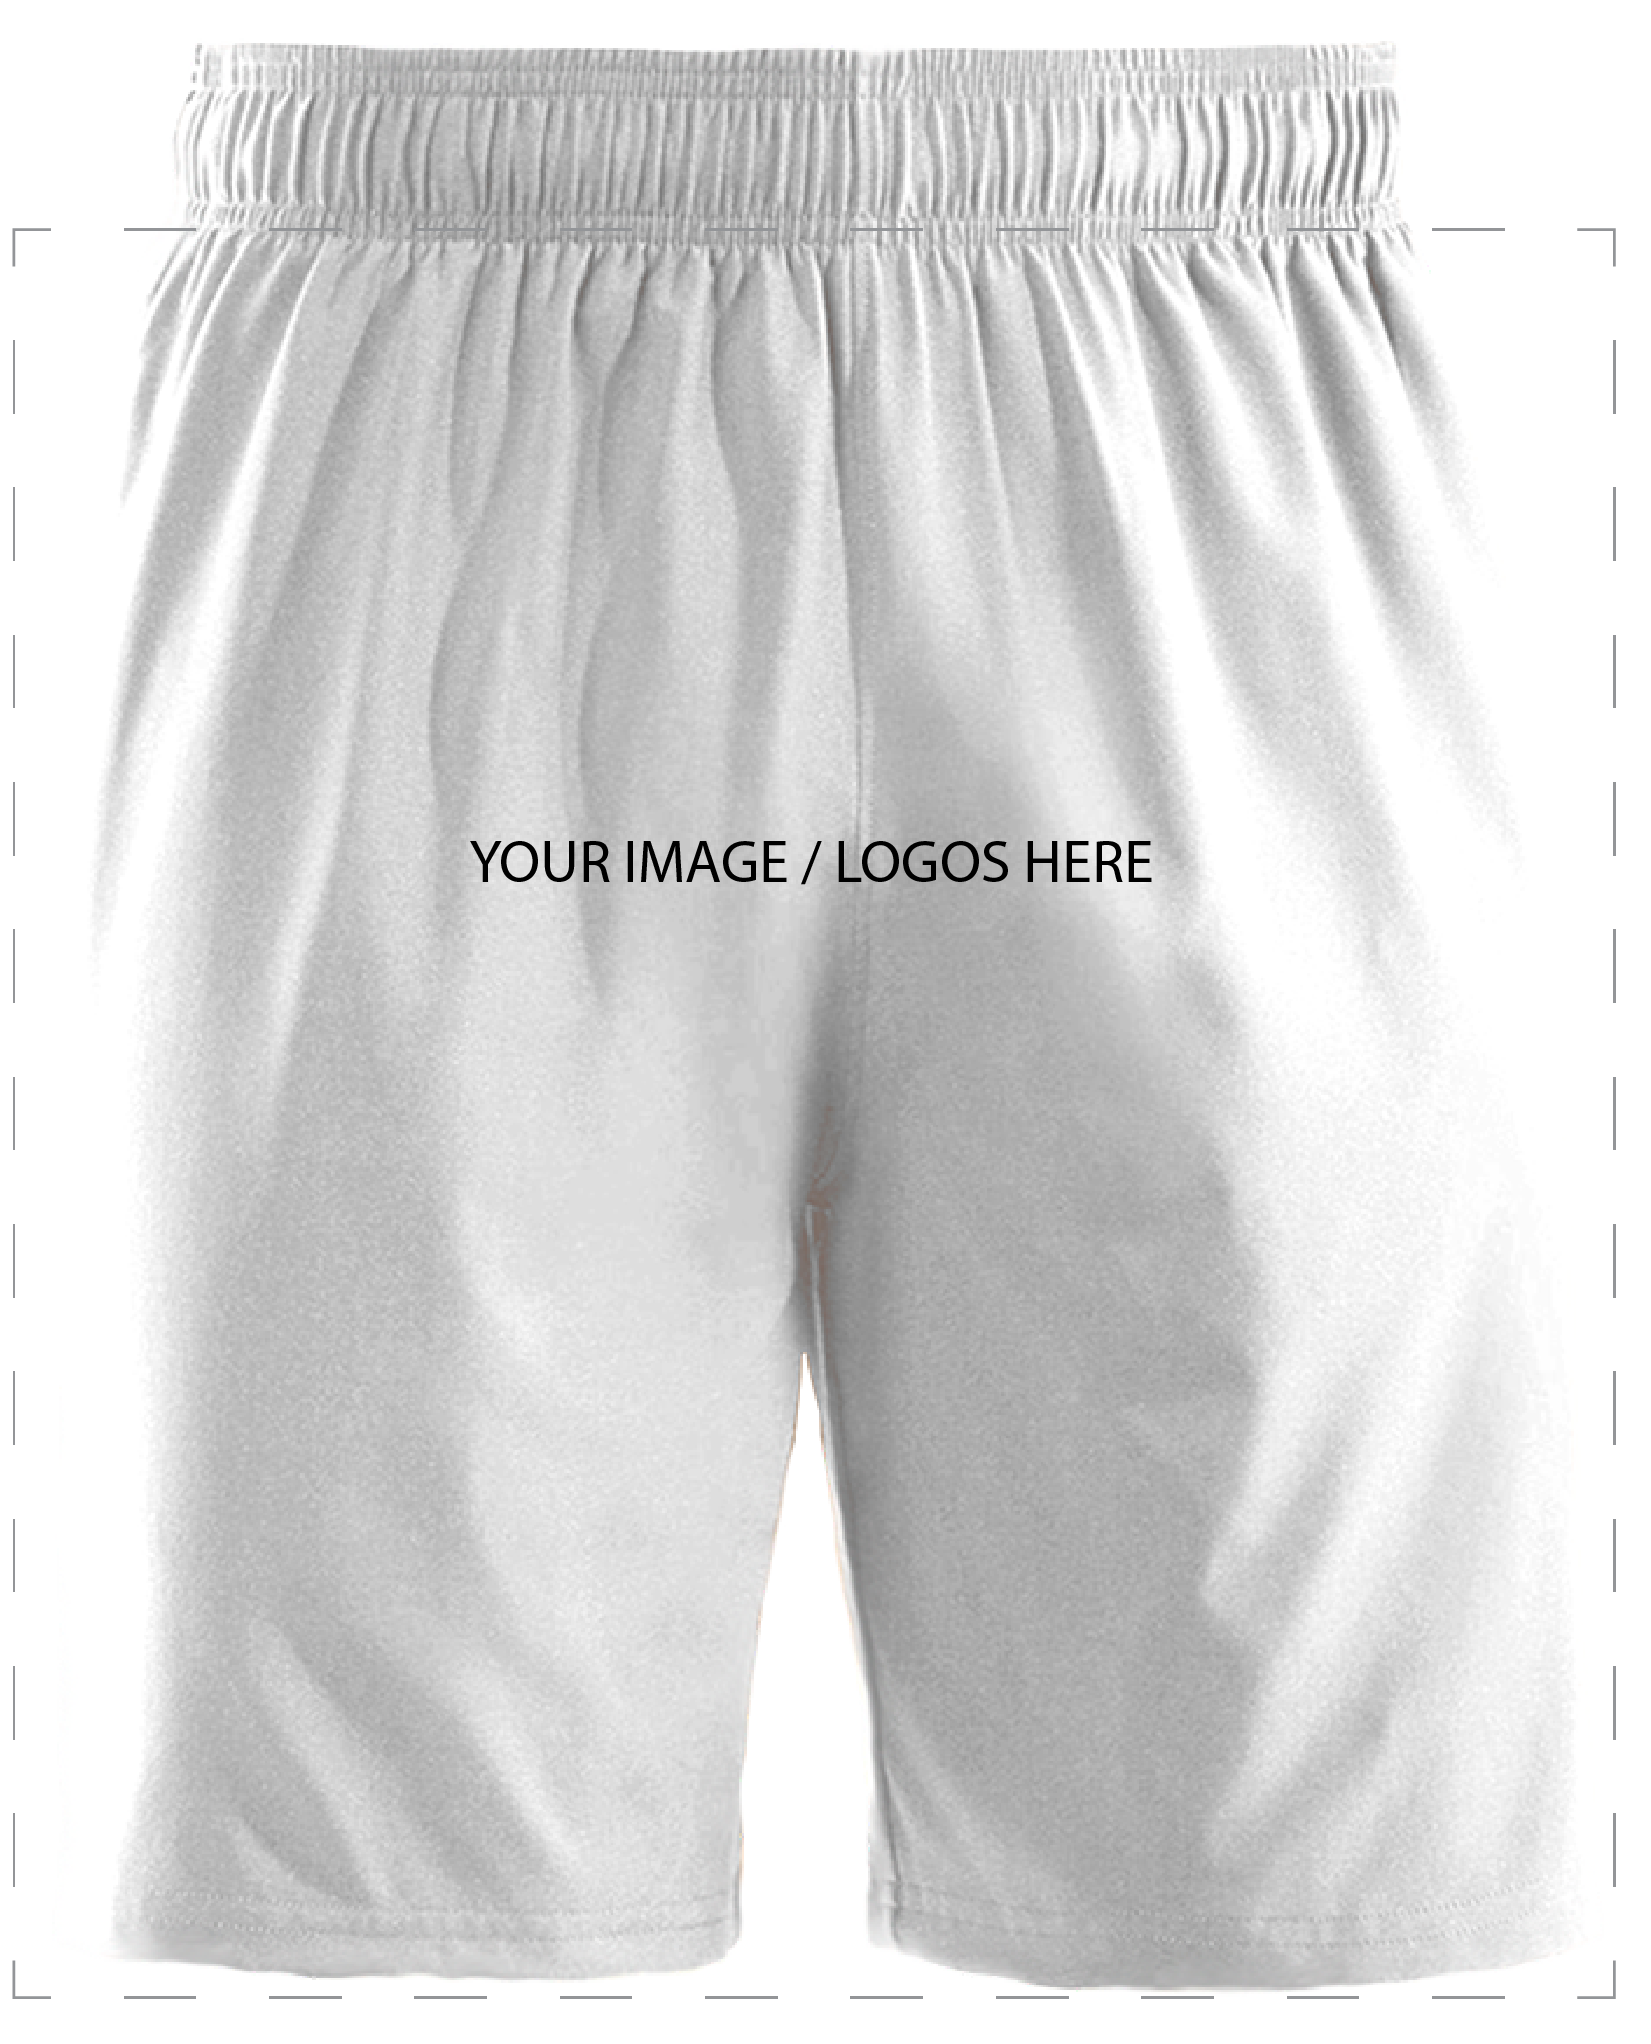 Custom Shorts | 7 bros apparel